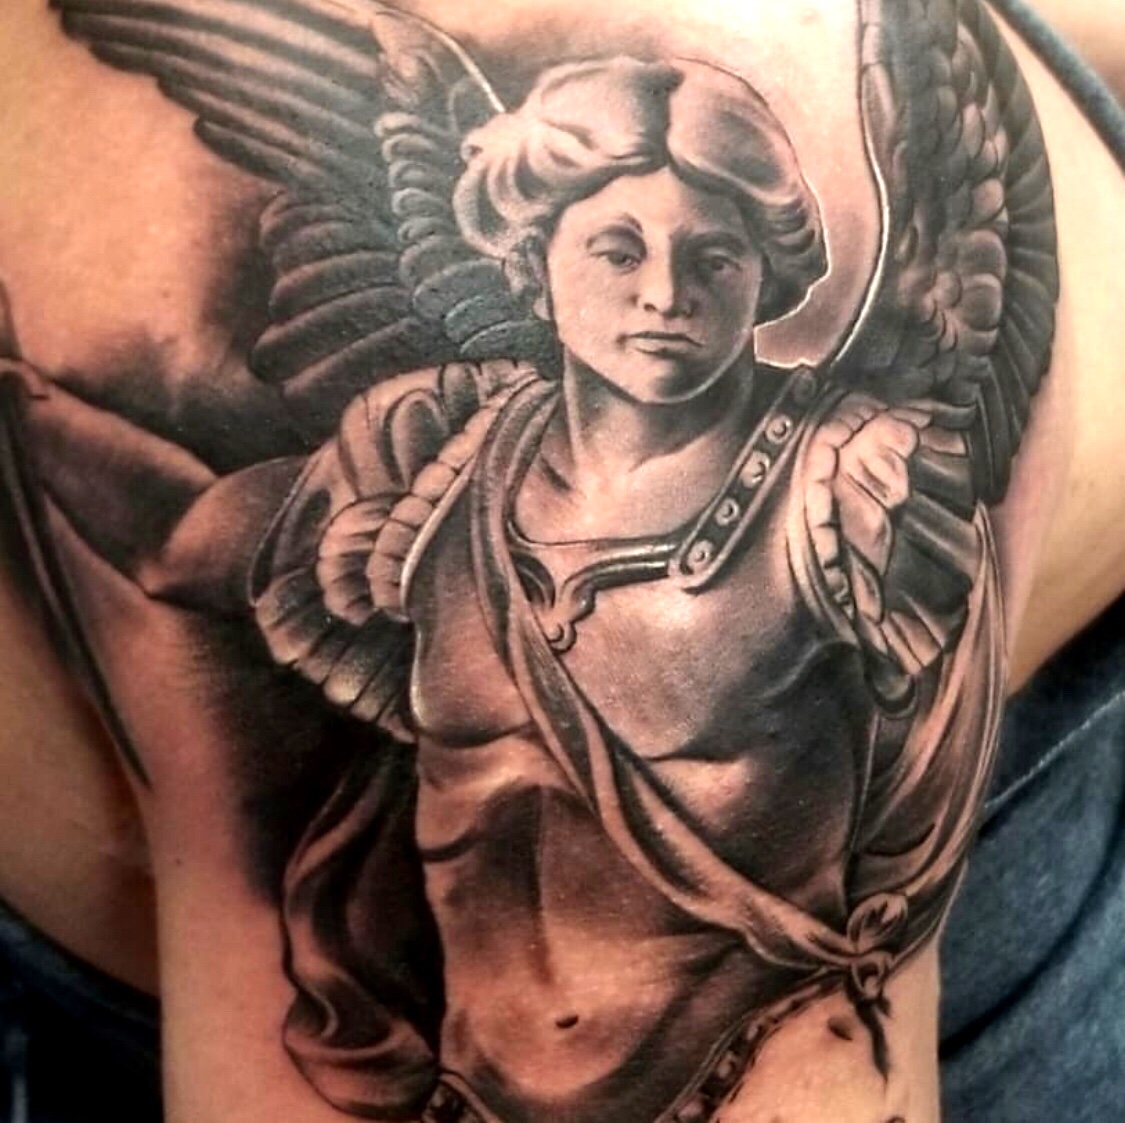 archangel michael defeating daemon by Mathew DeLaMort : Tattoos